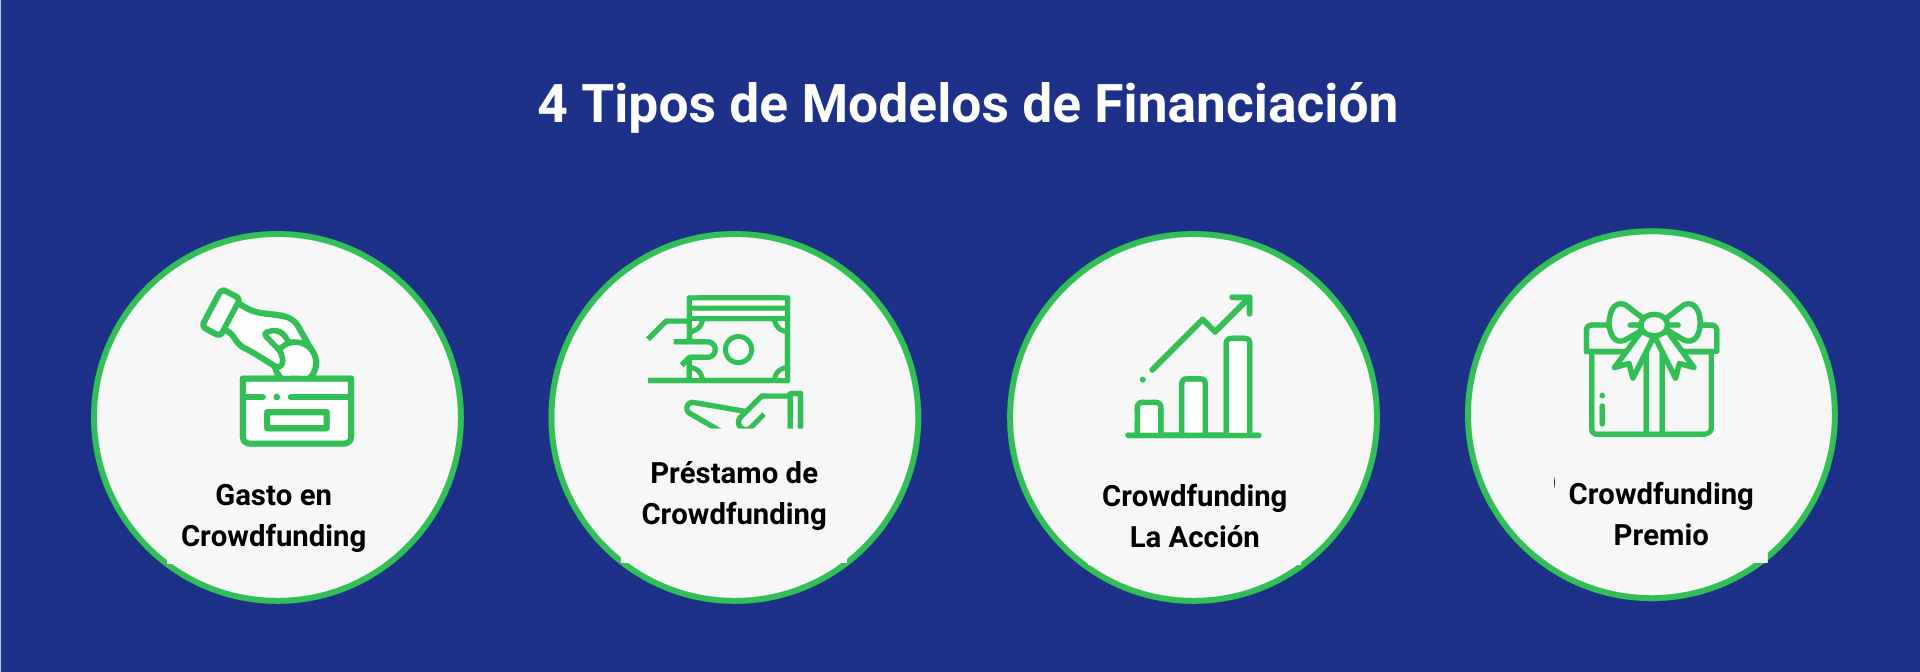 4 Tipos de Modelos de Financiación